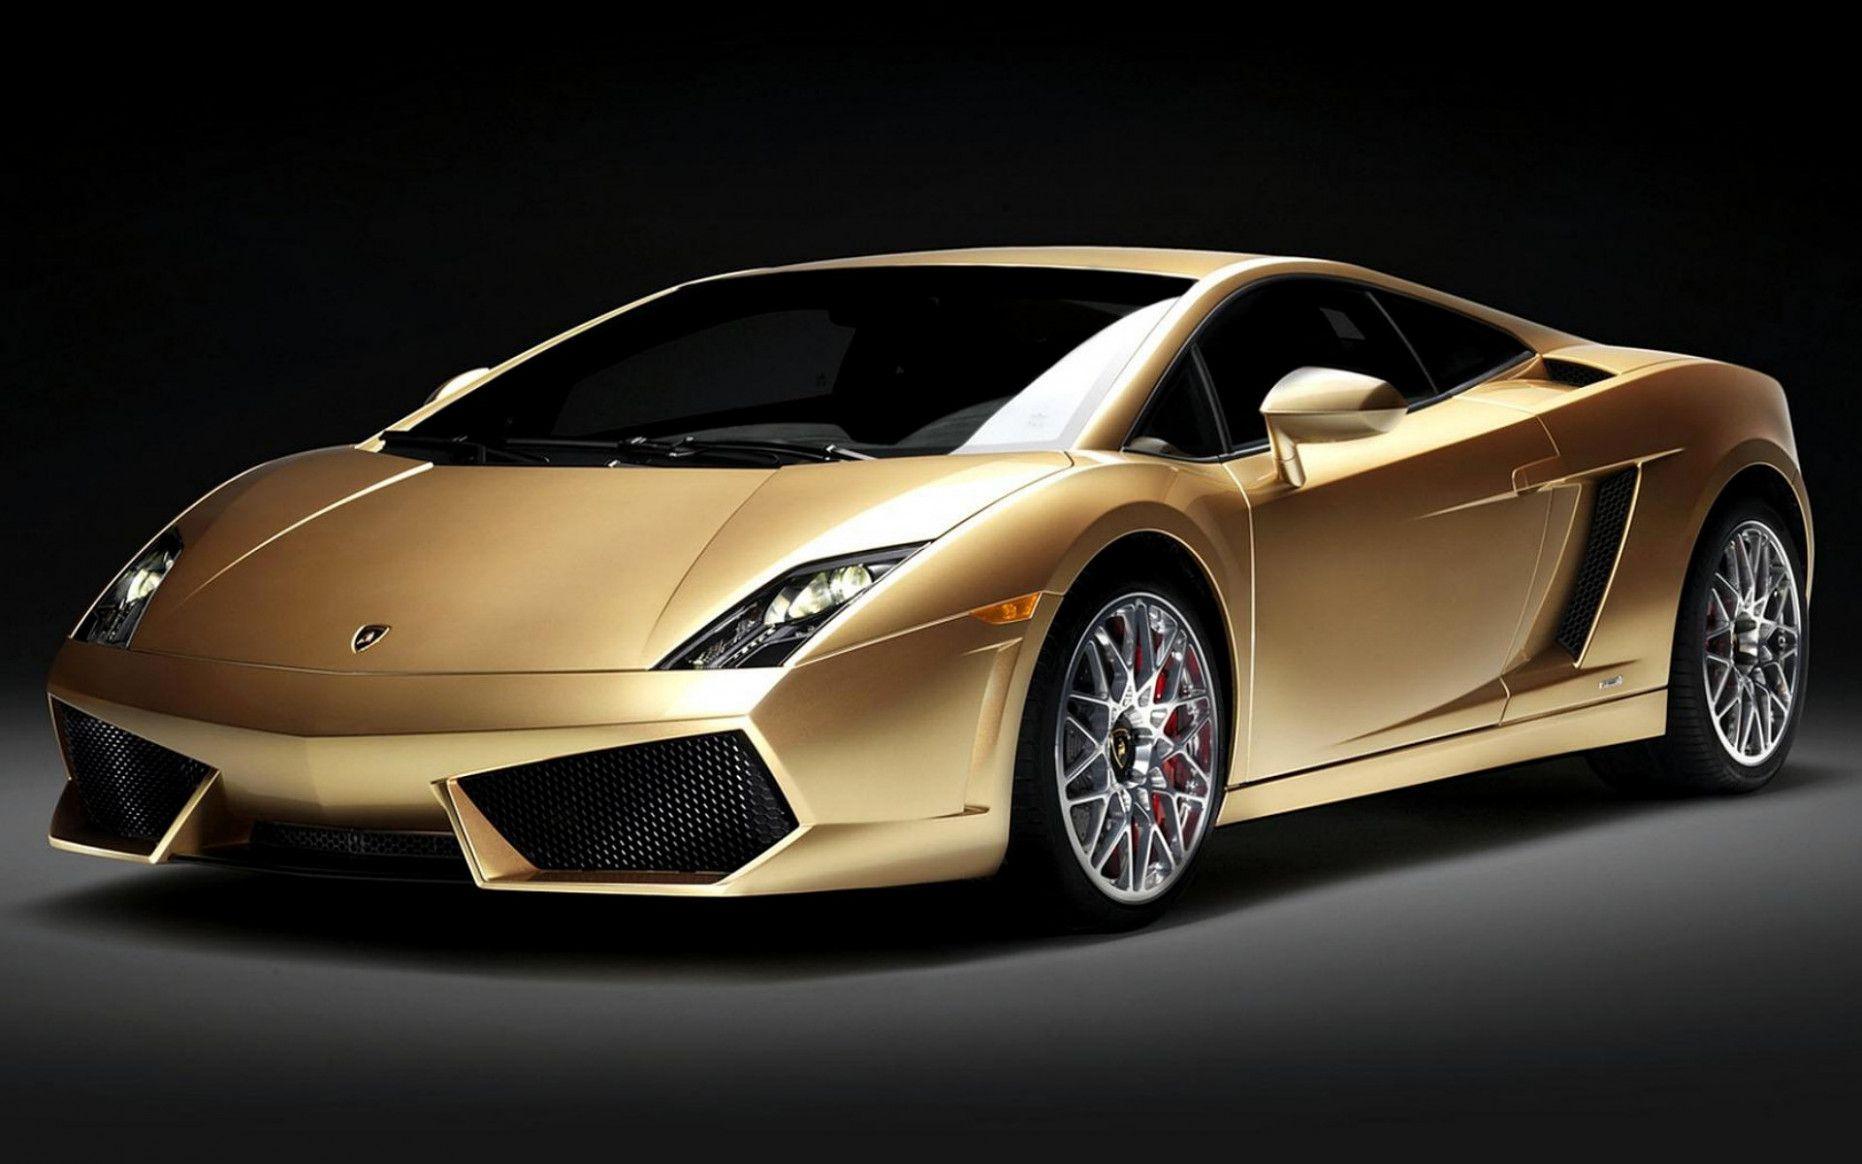 Gold Lamborghini Wallpapers - Top Free Gold Lamborghini Backgrounds ...